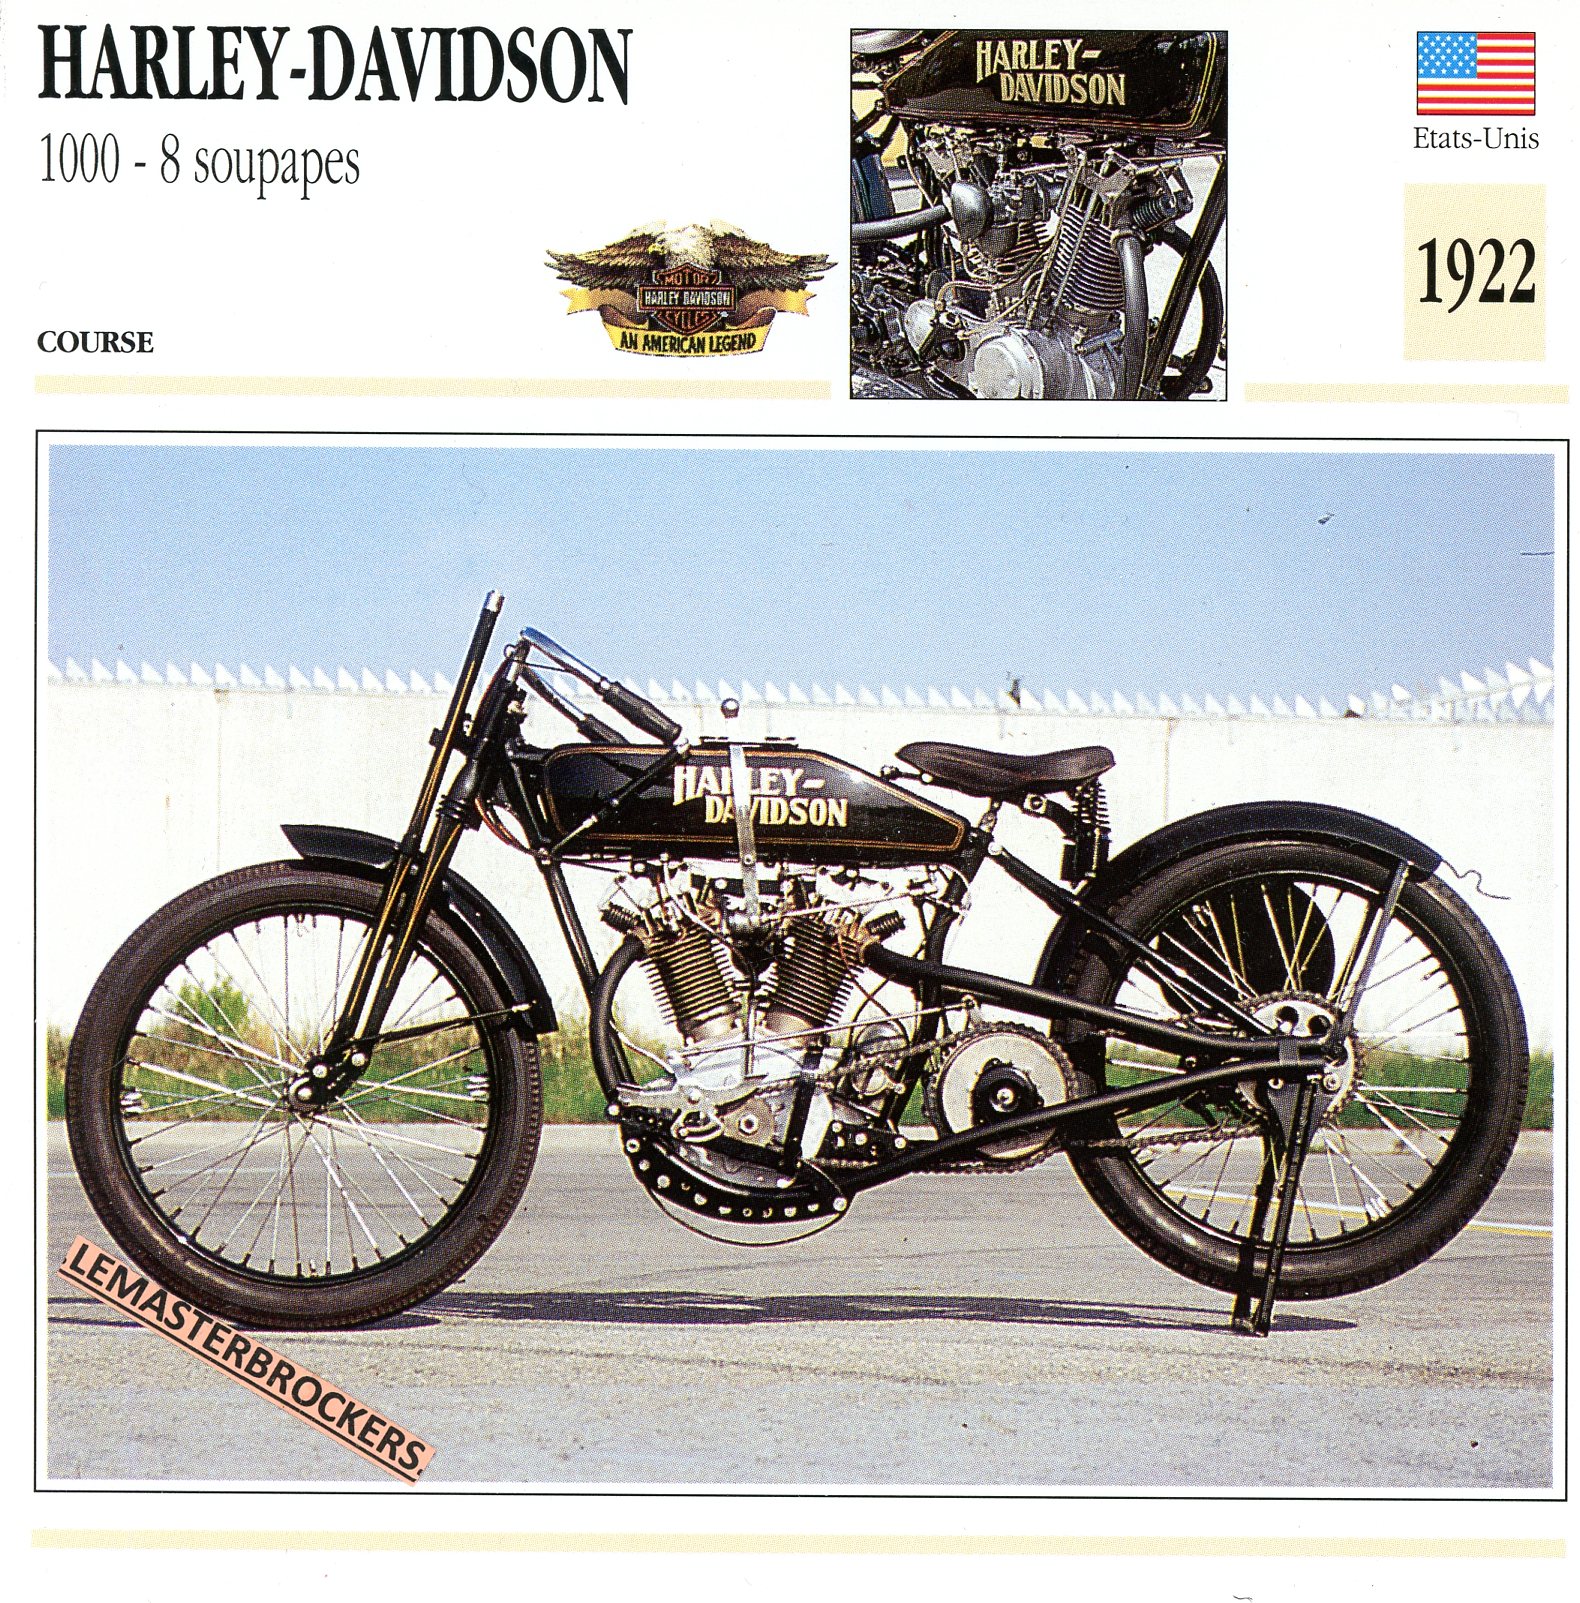 HARLEY-DAVIDSON-1000-8-SOUPAPES-1922-FICHE-MOTO-LEMASTERBROCKERS